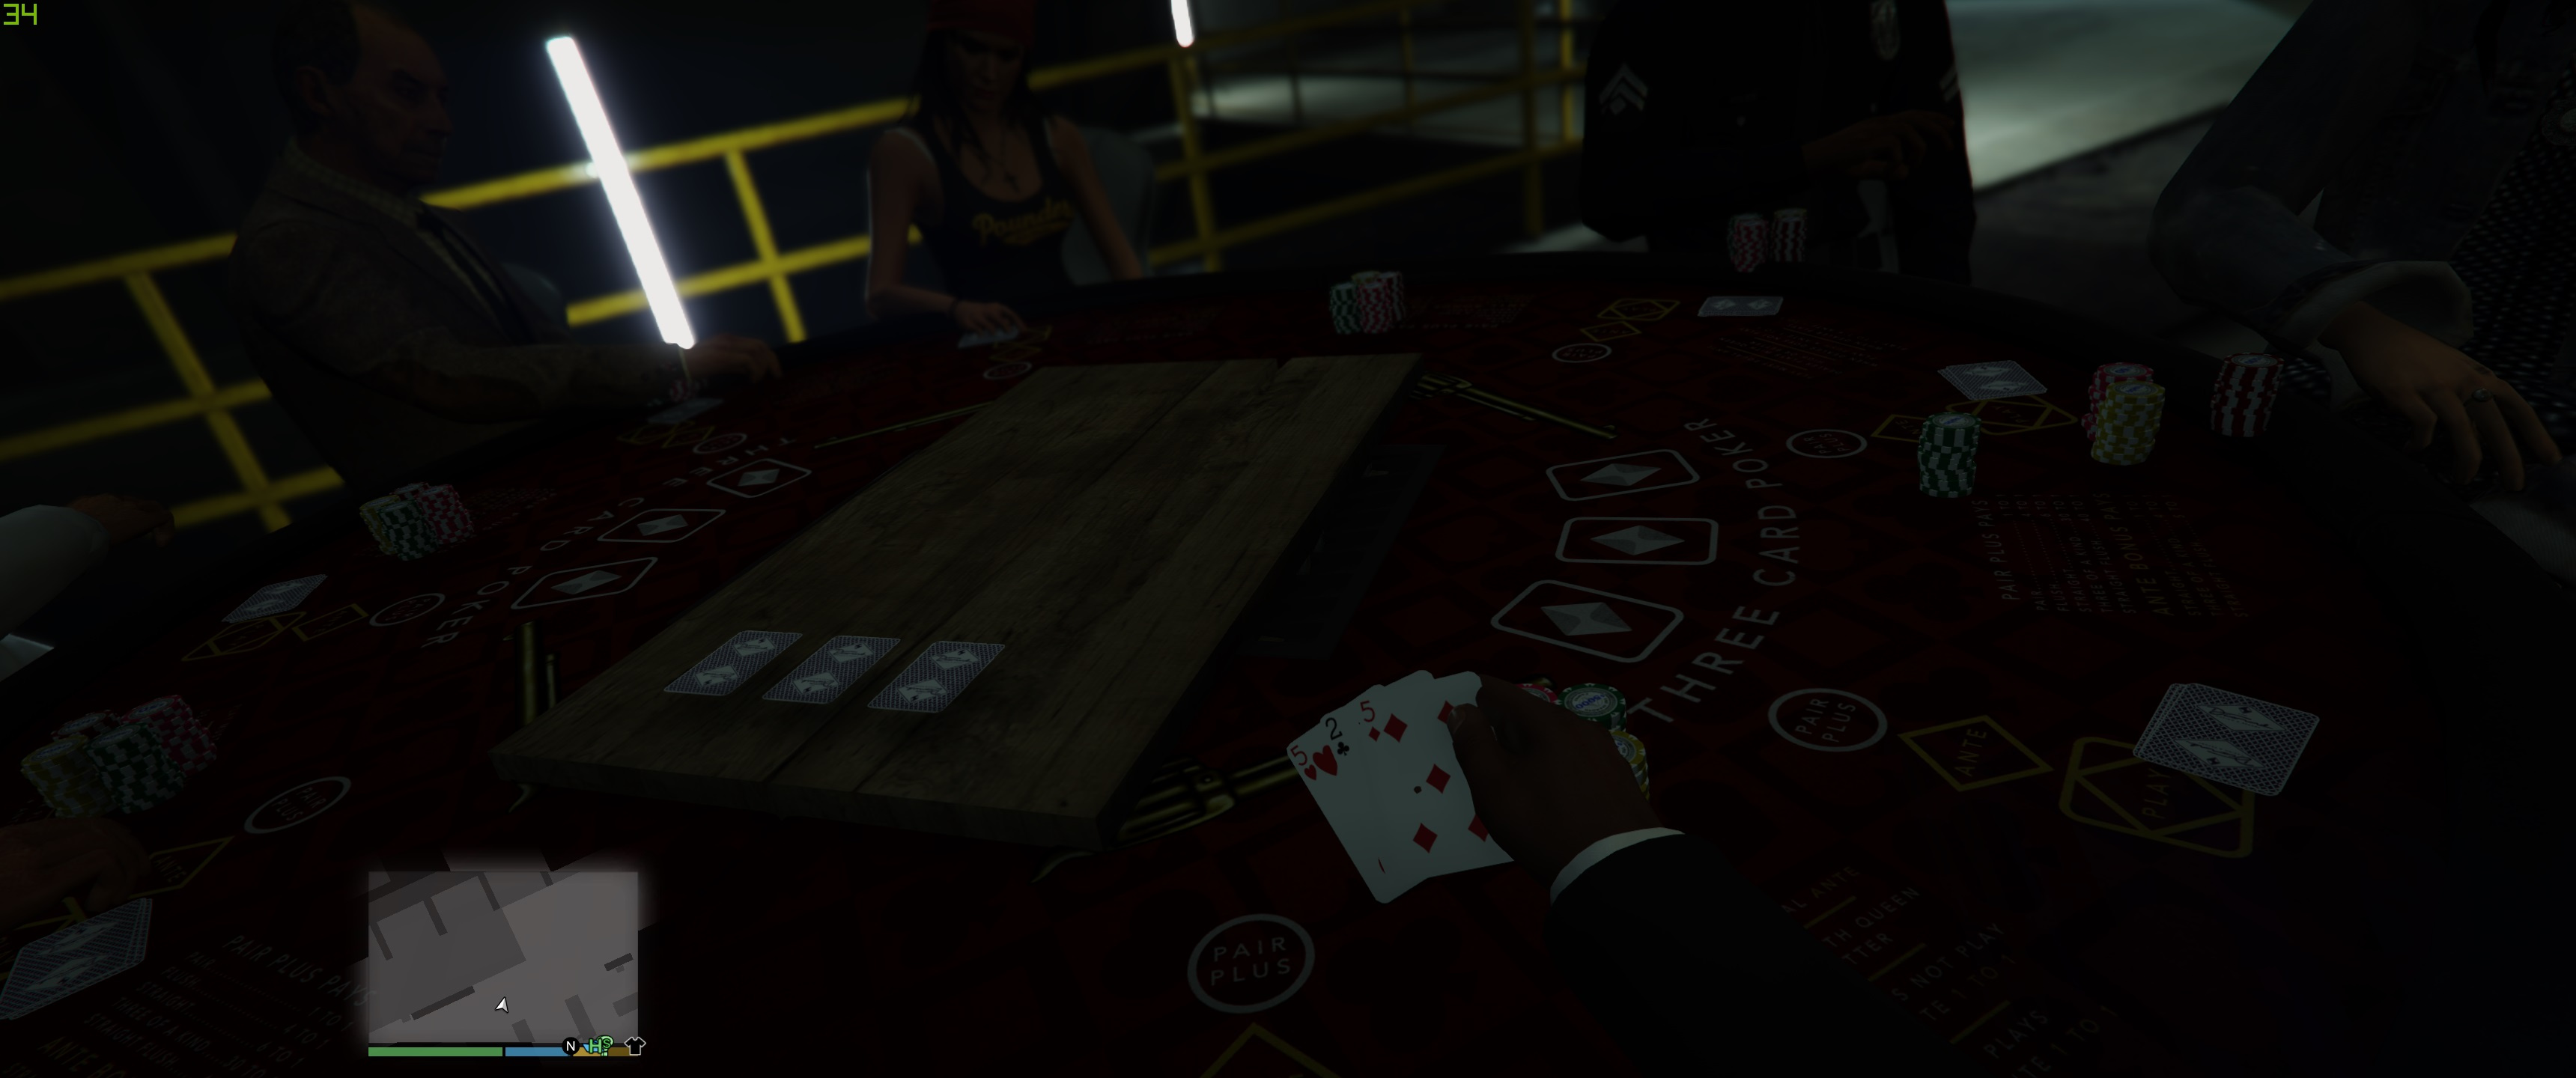 Underground Casino MLO In GTA 5 RP (FiveM)